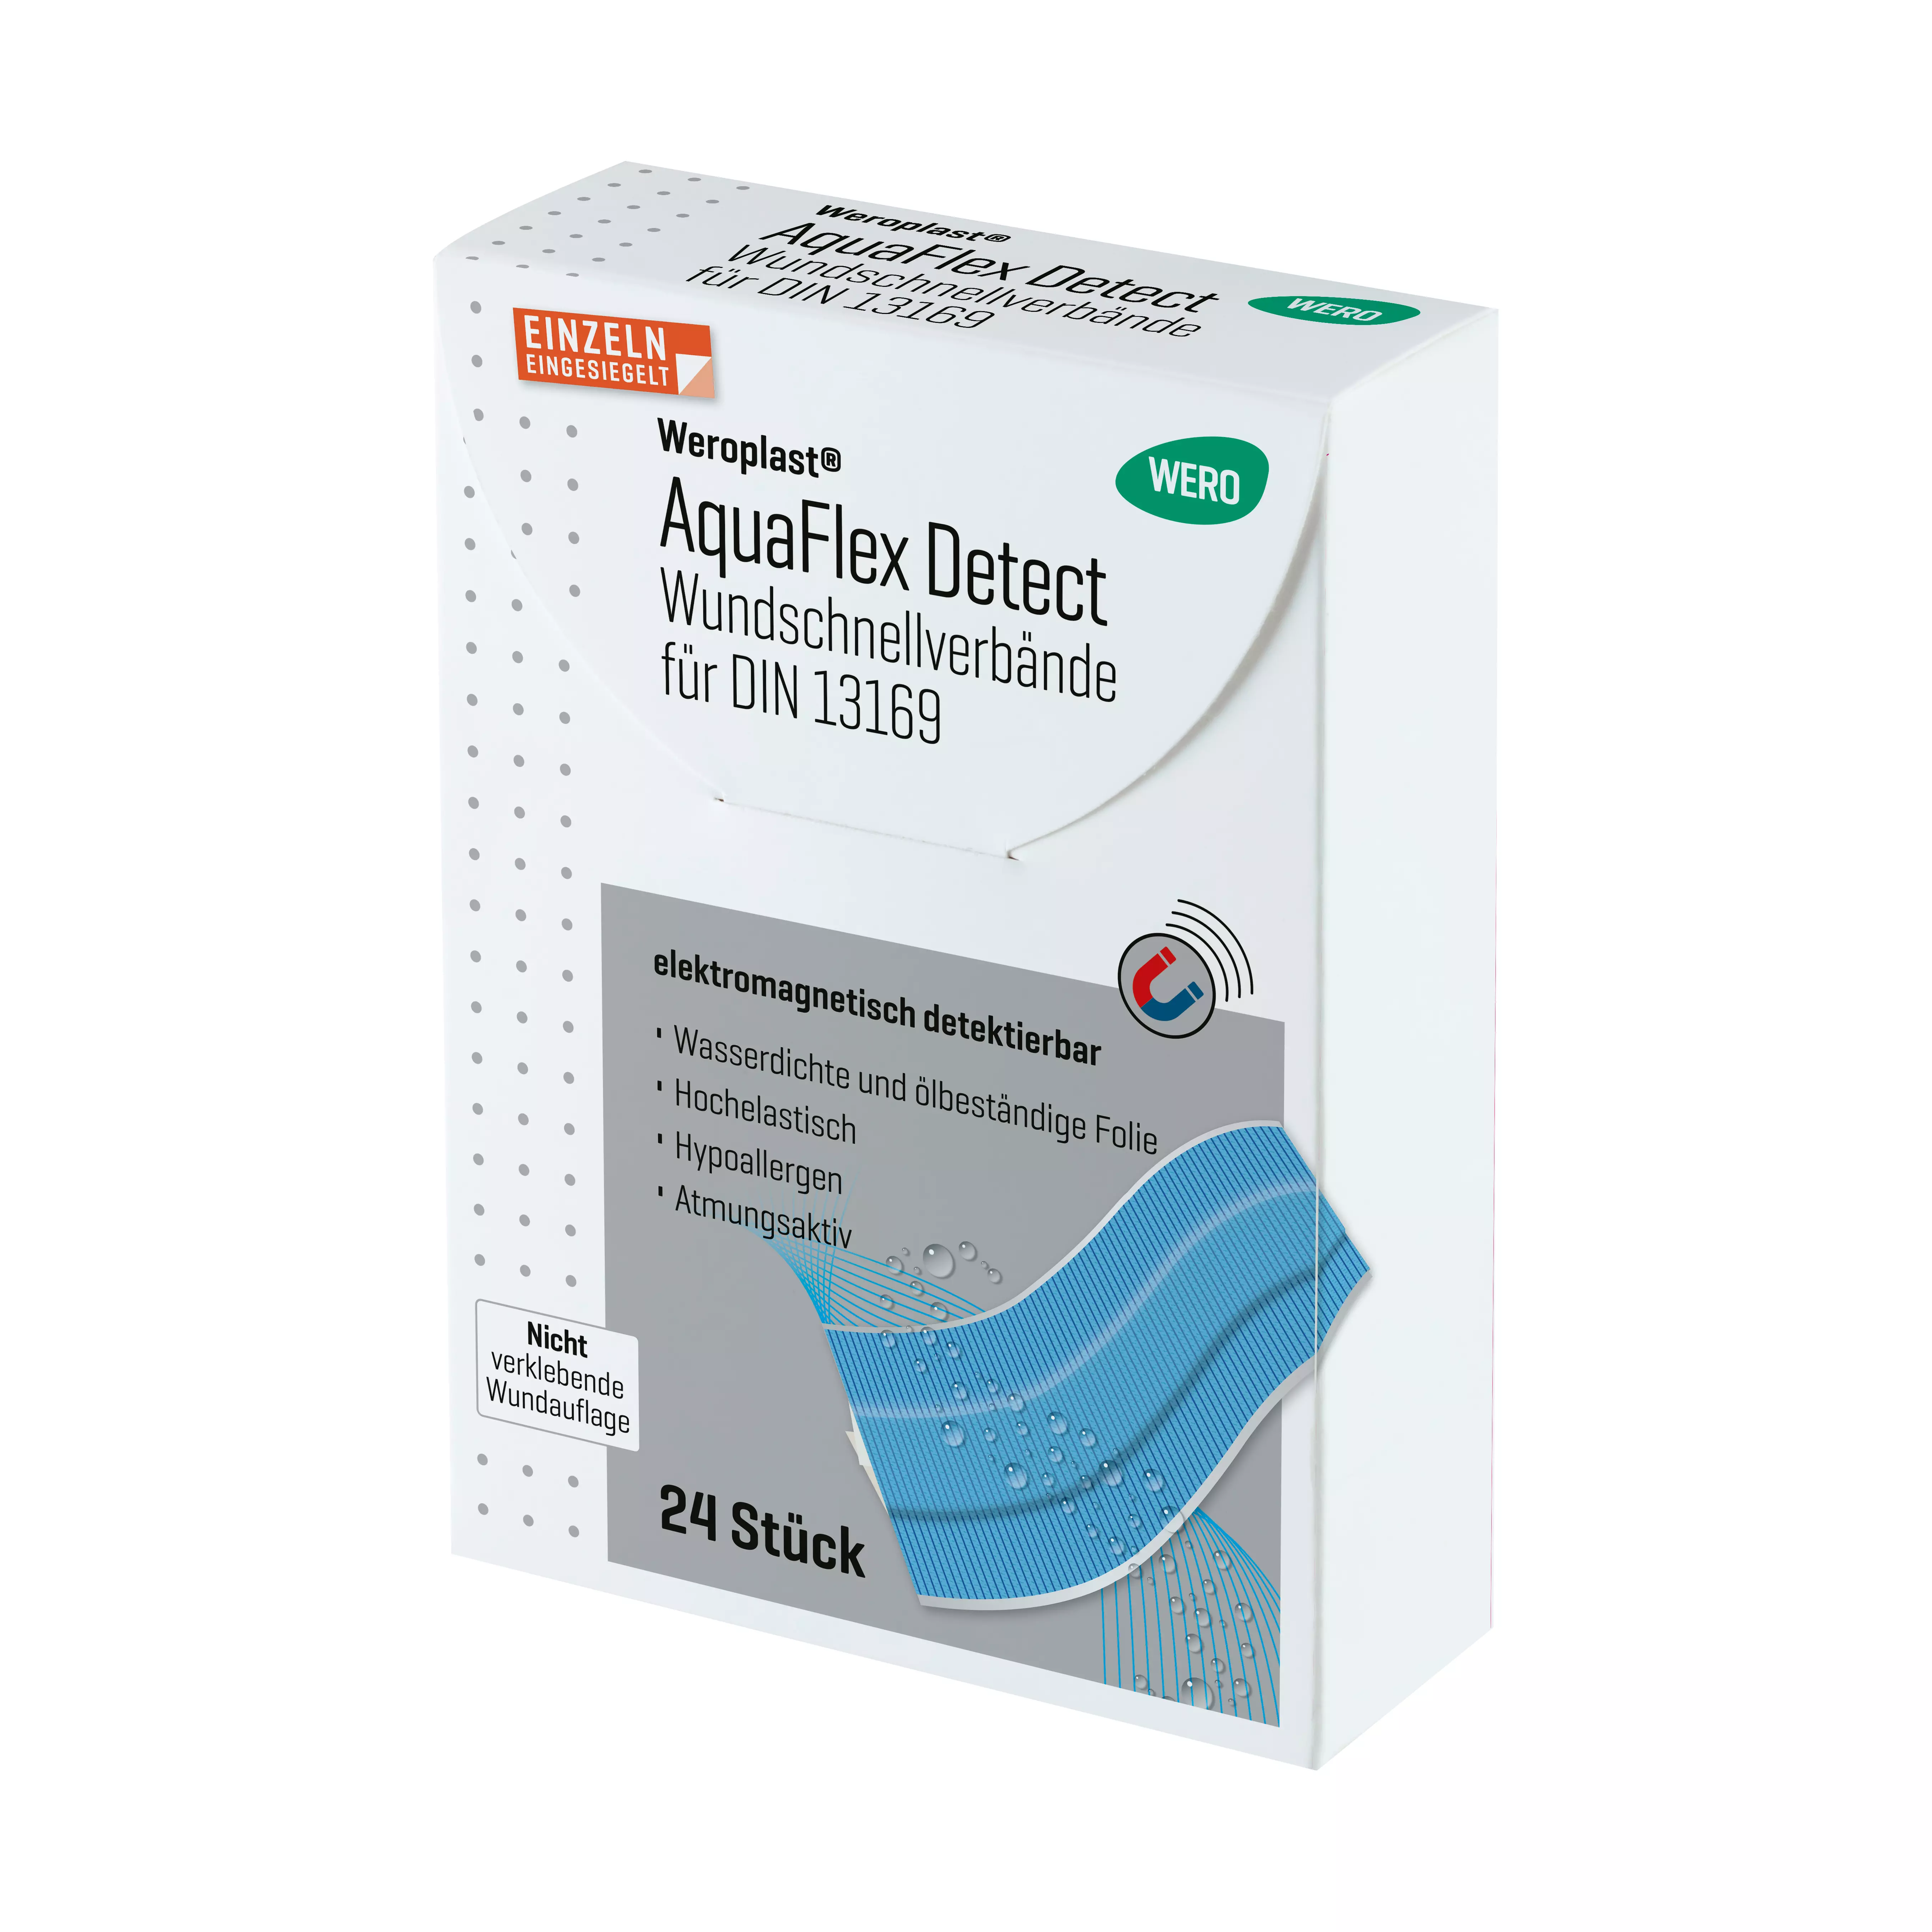 Weroplast® AquaFlex Detect plasters - Quick wound dressings DIN 13169